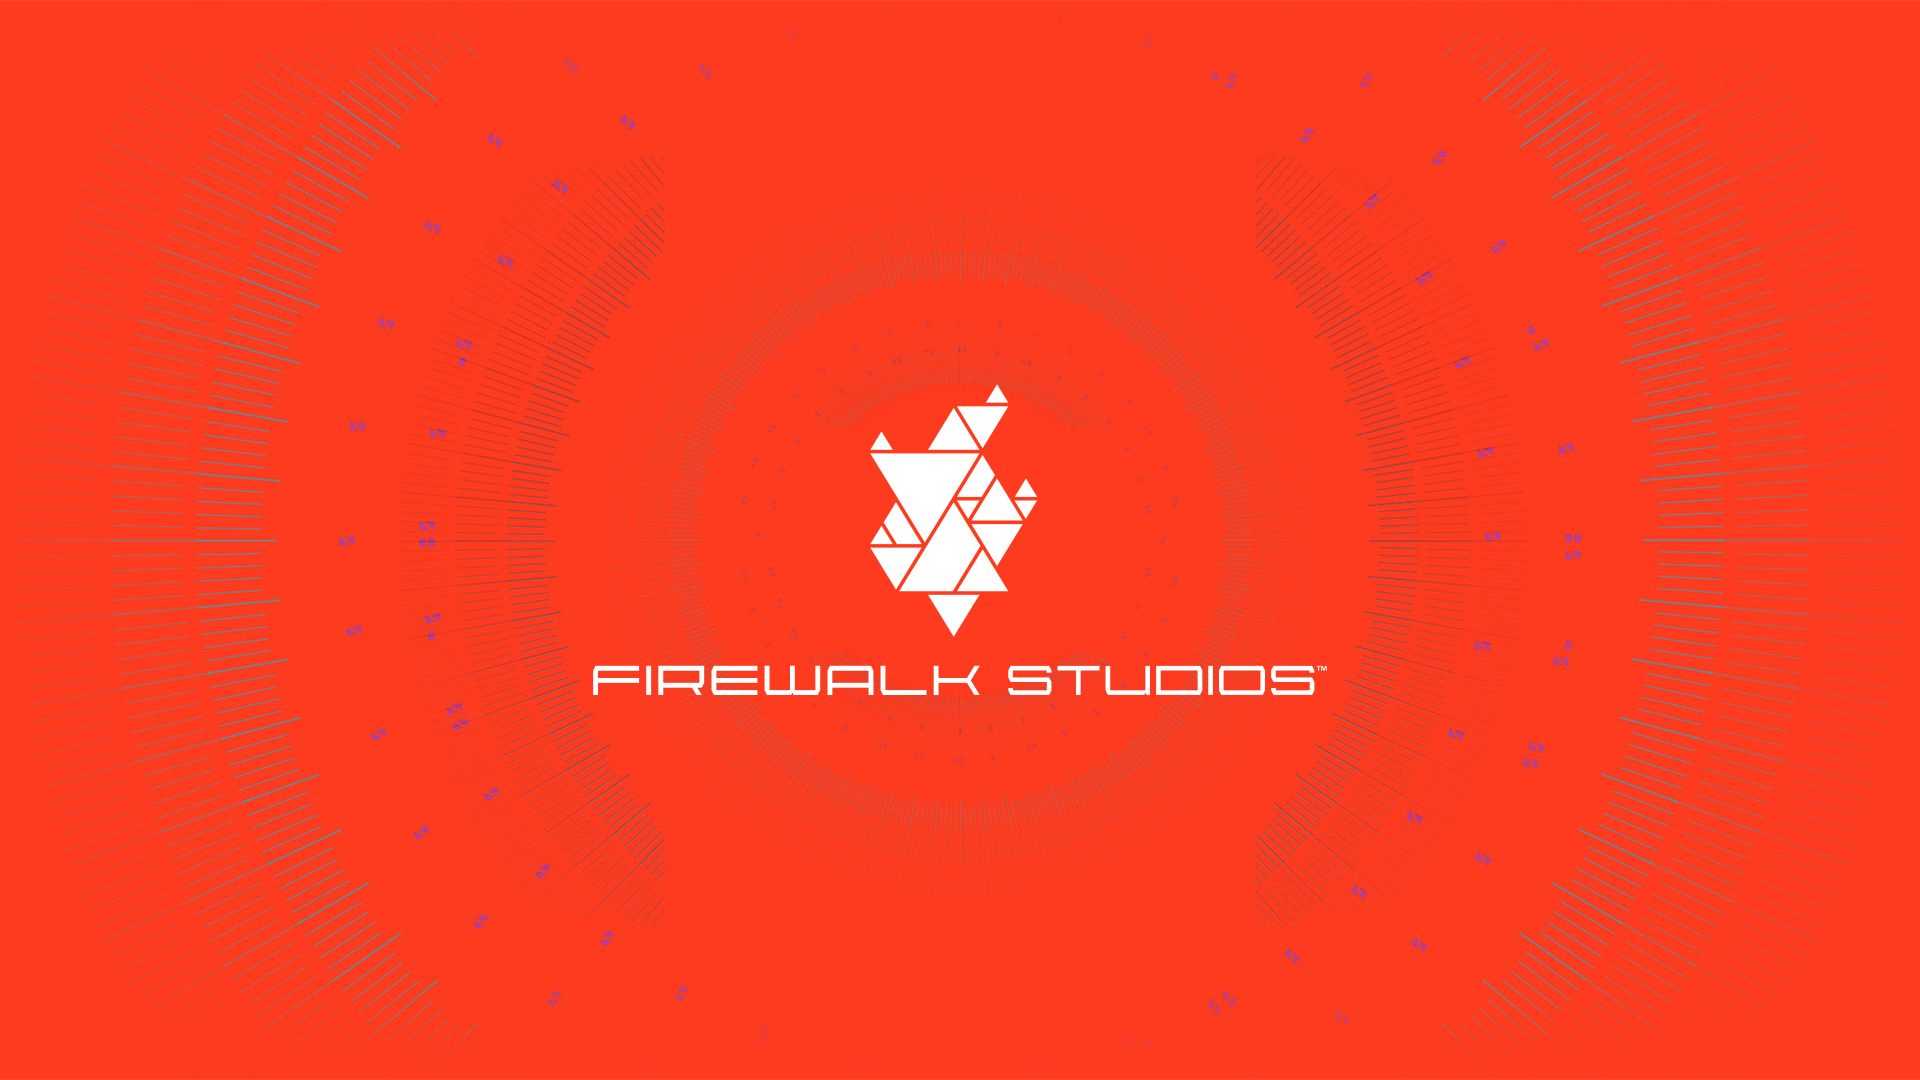 FIrewalk Studios